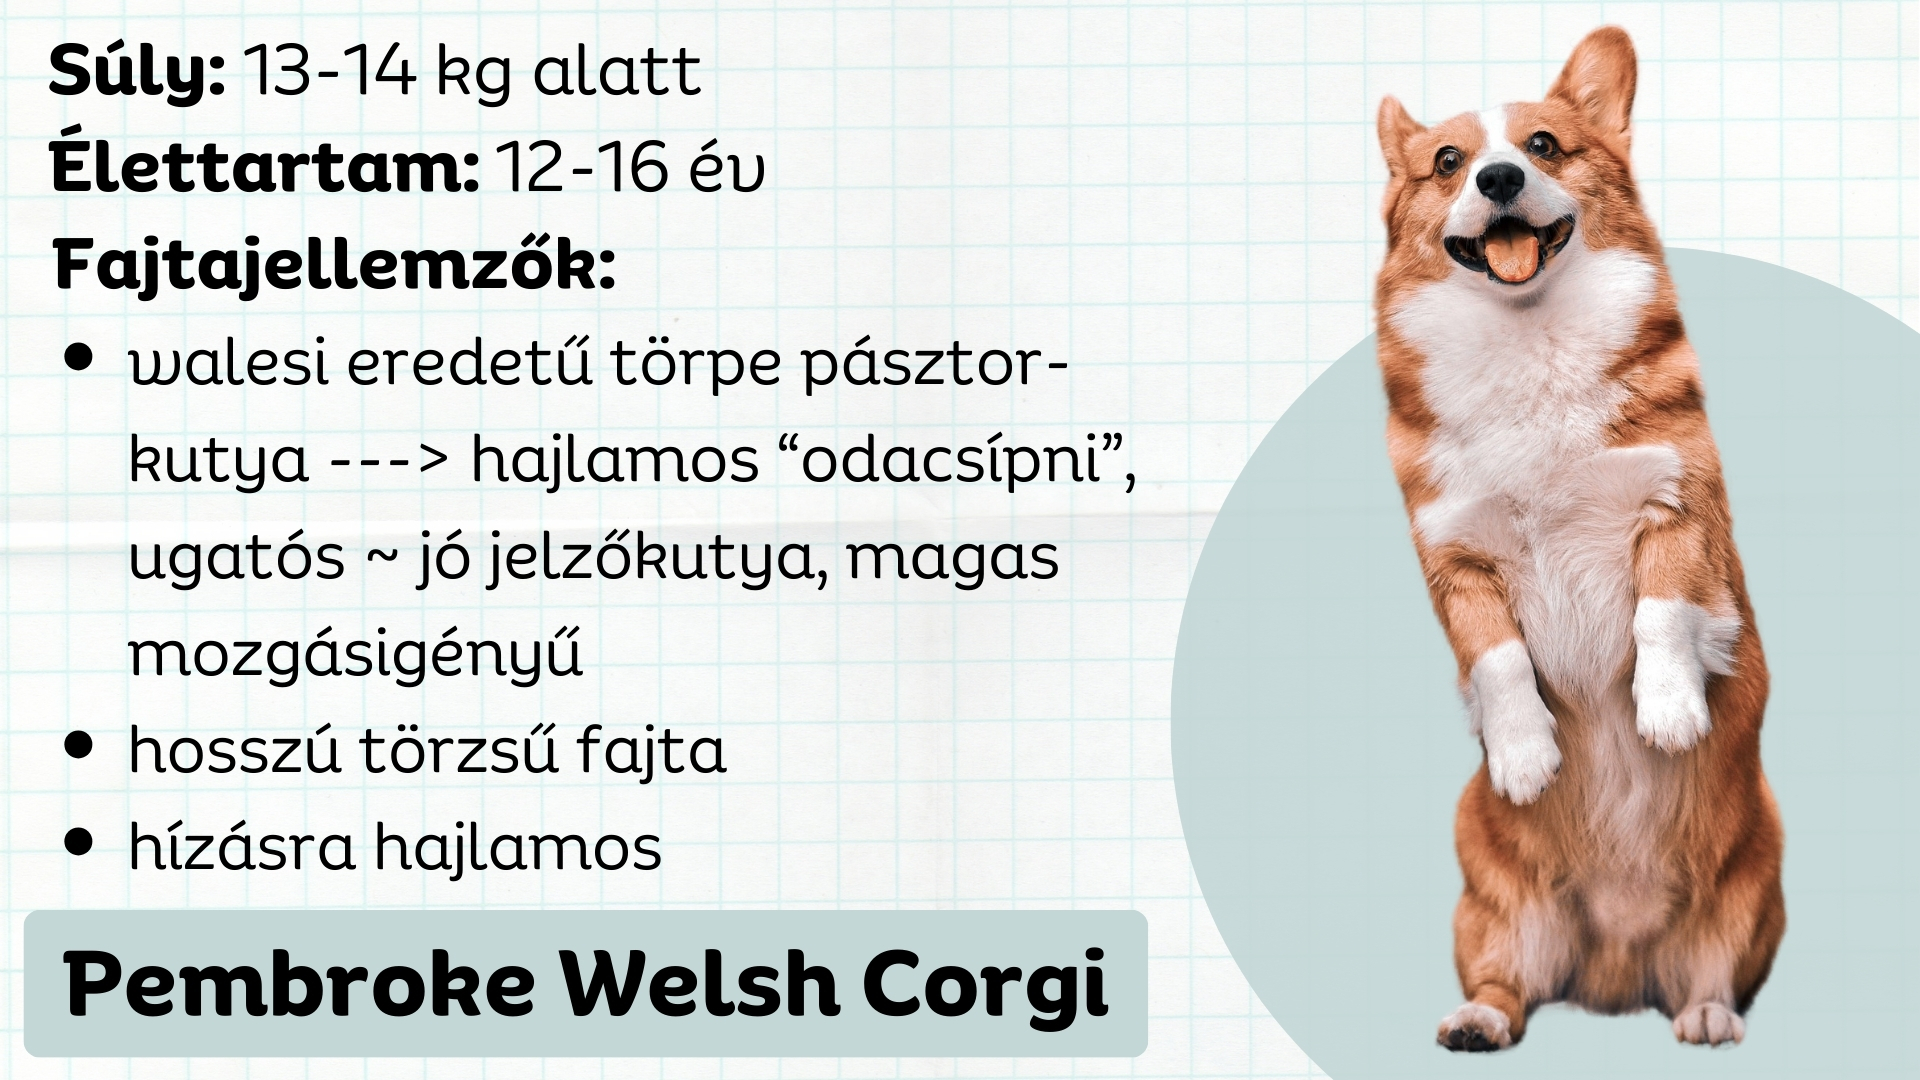 Pembroke Welsh Corgi fajtajellemzők